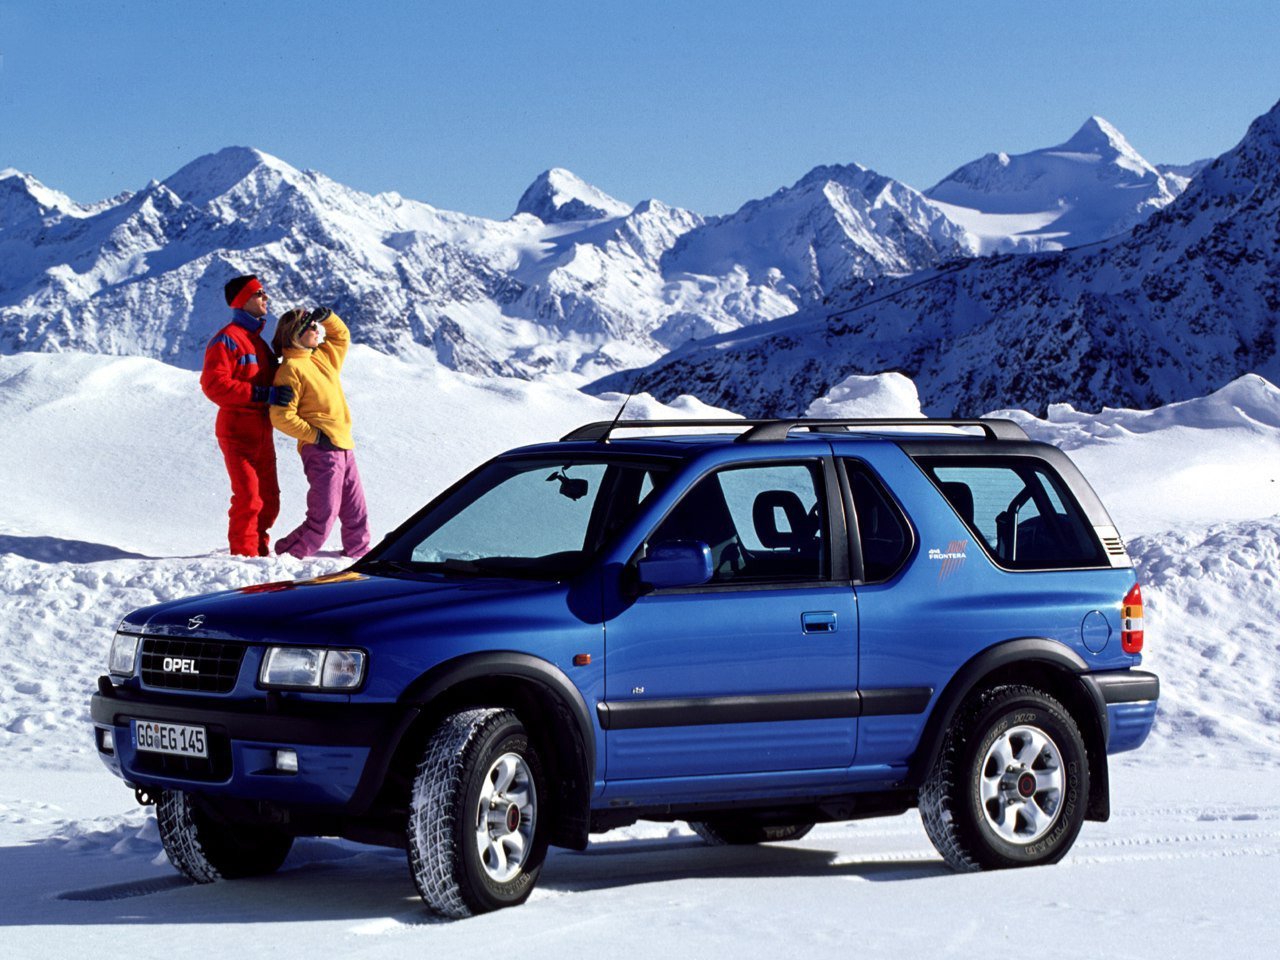 Opel Frontera 1998 - 2001